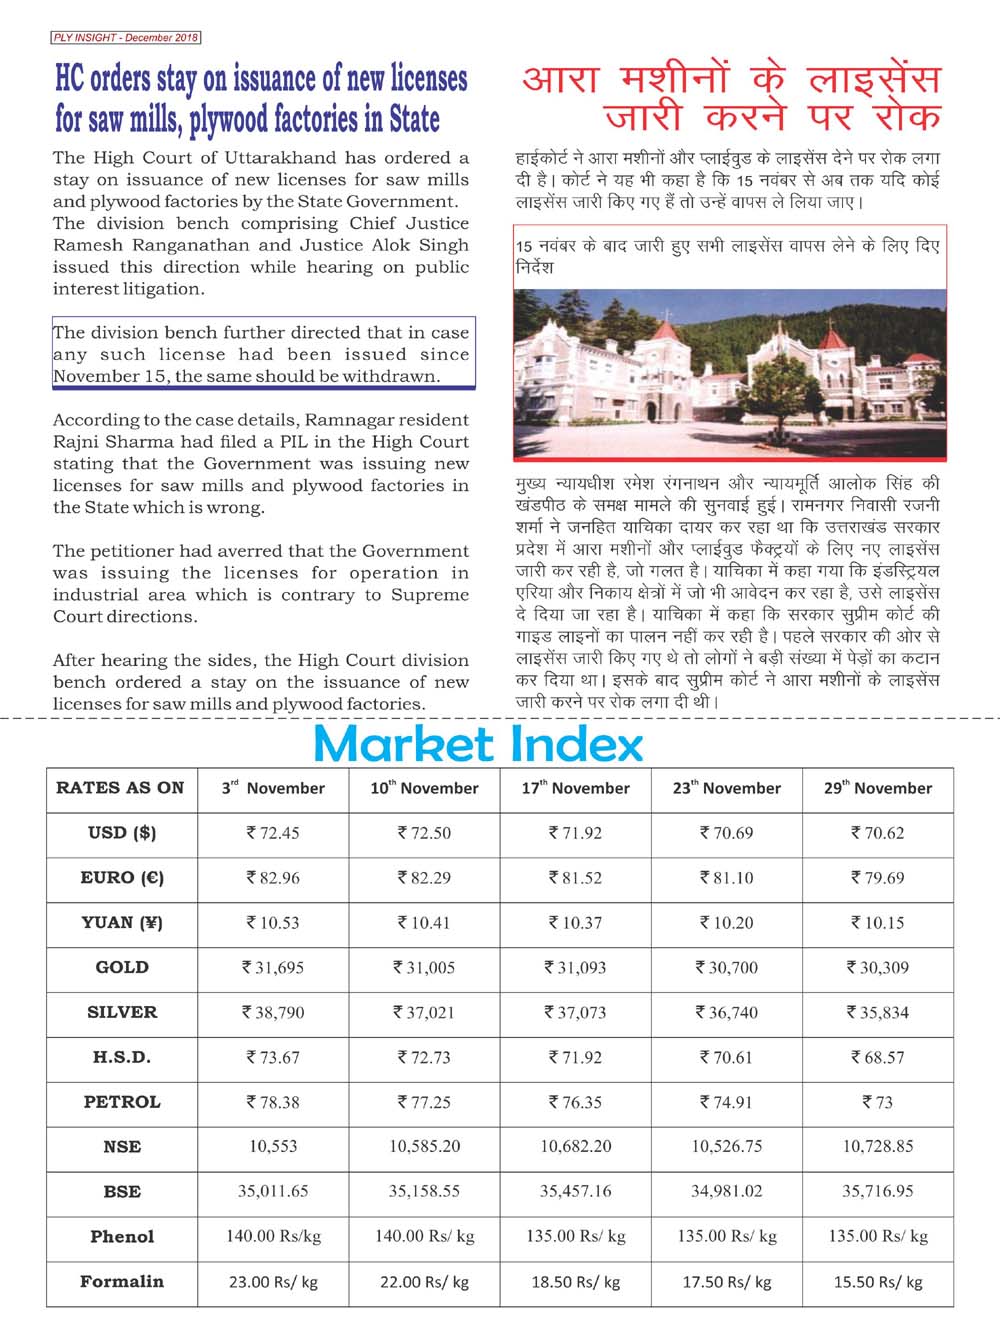 Market Index